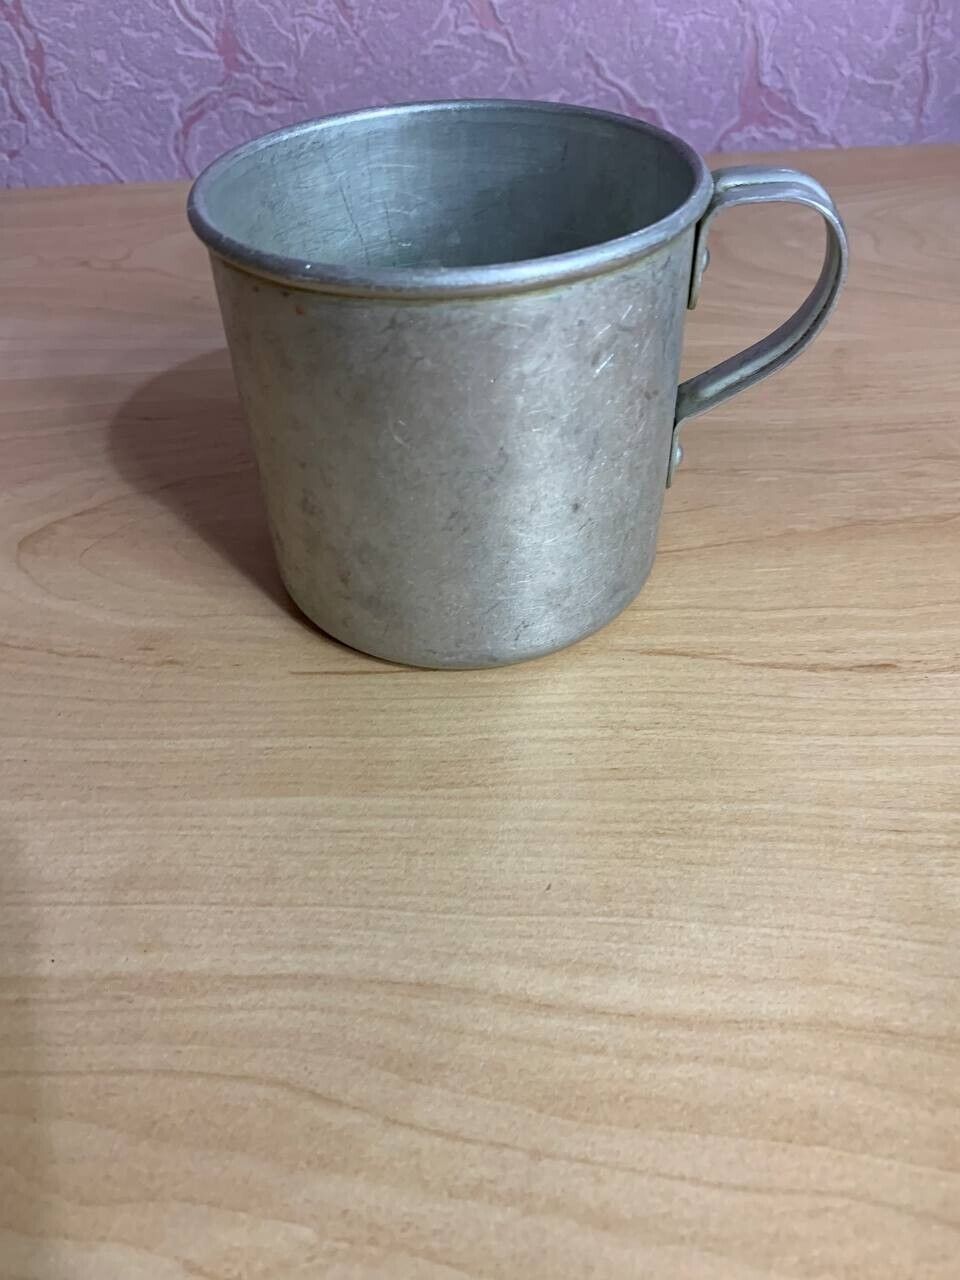 USSR Soviet Union Russian Army Soldier Aluminium Cup Mug